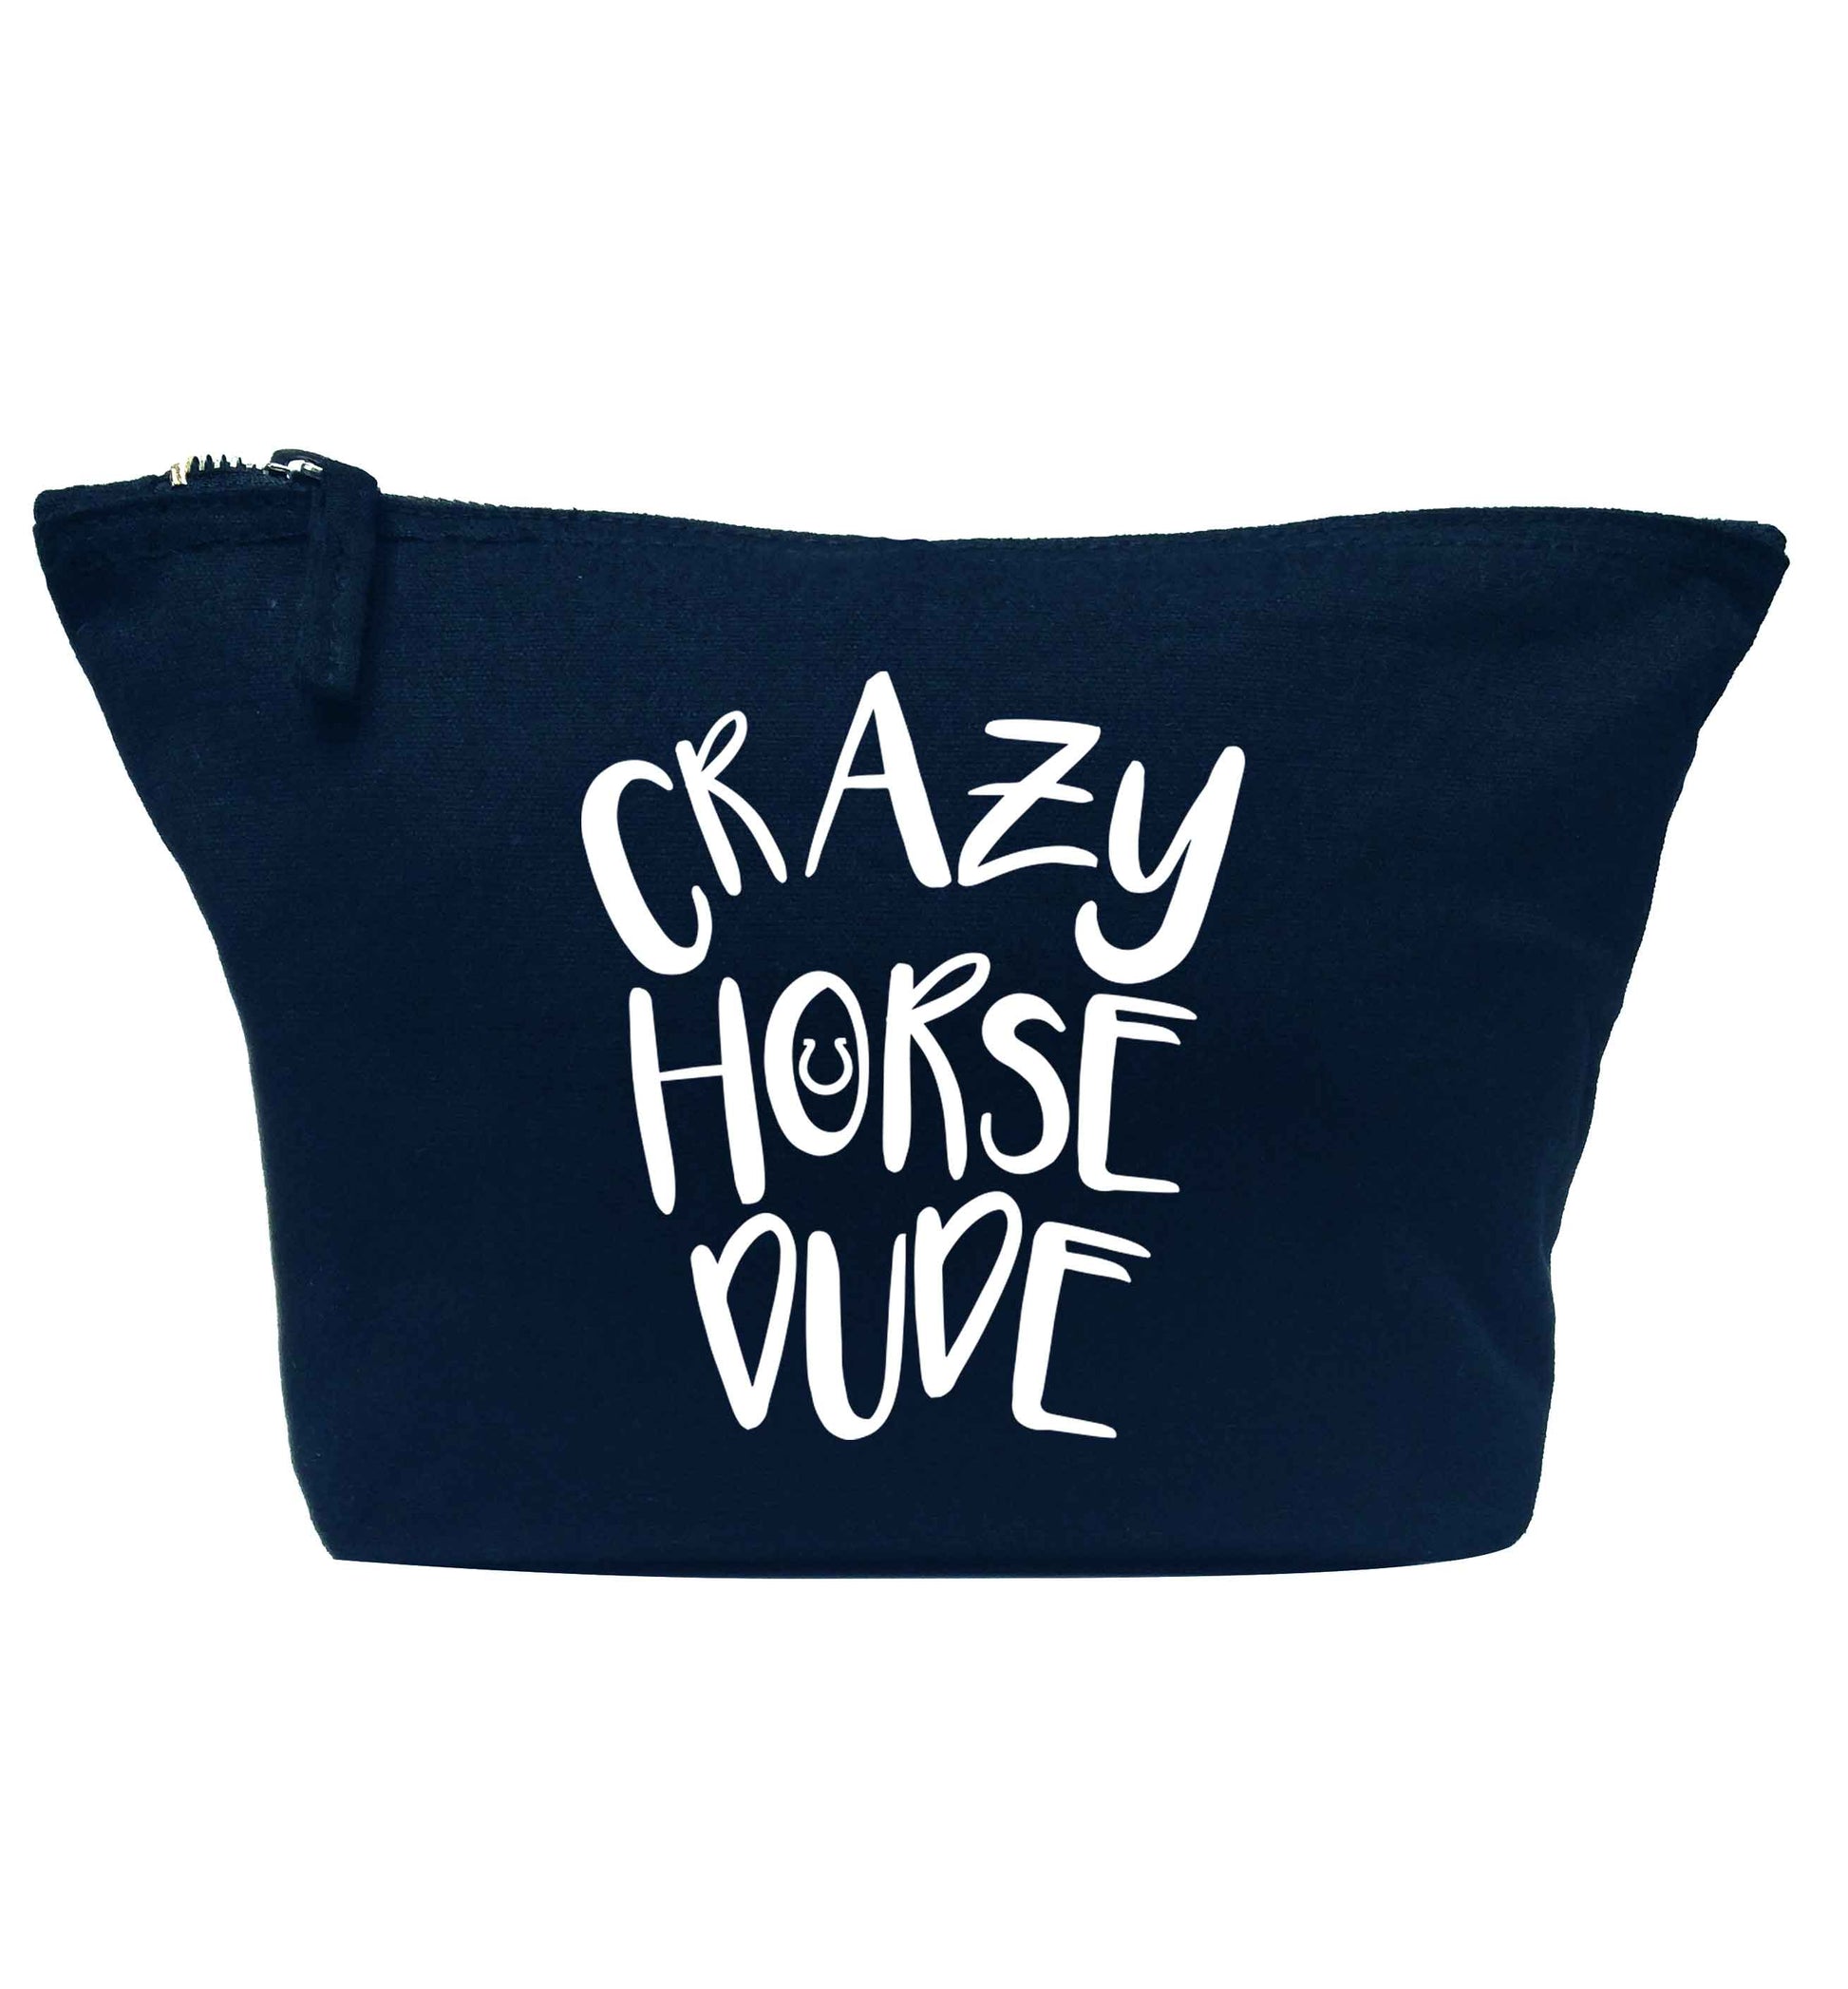 Crazy horse dude navy makeup bag